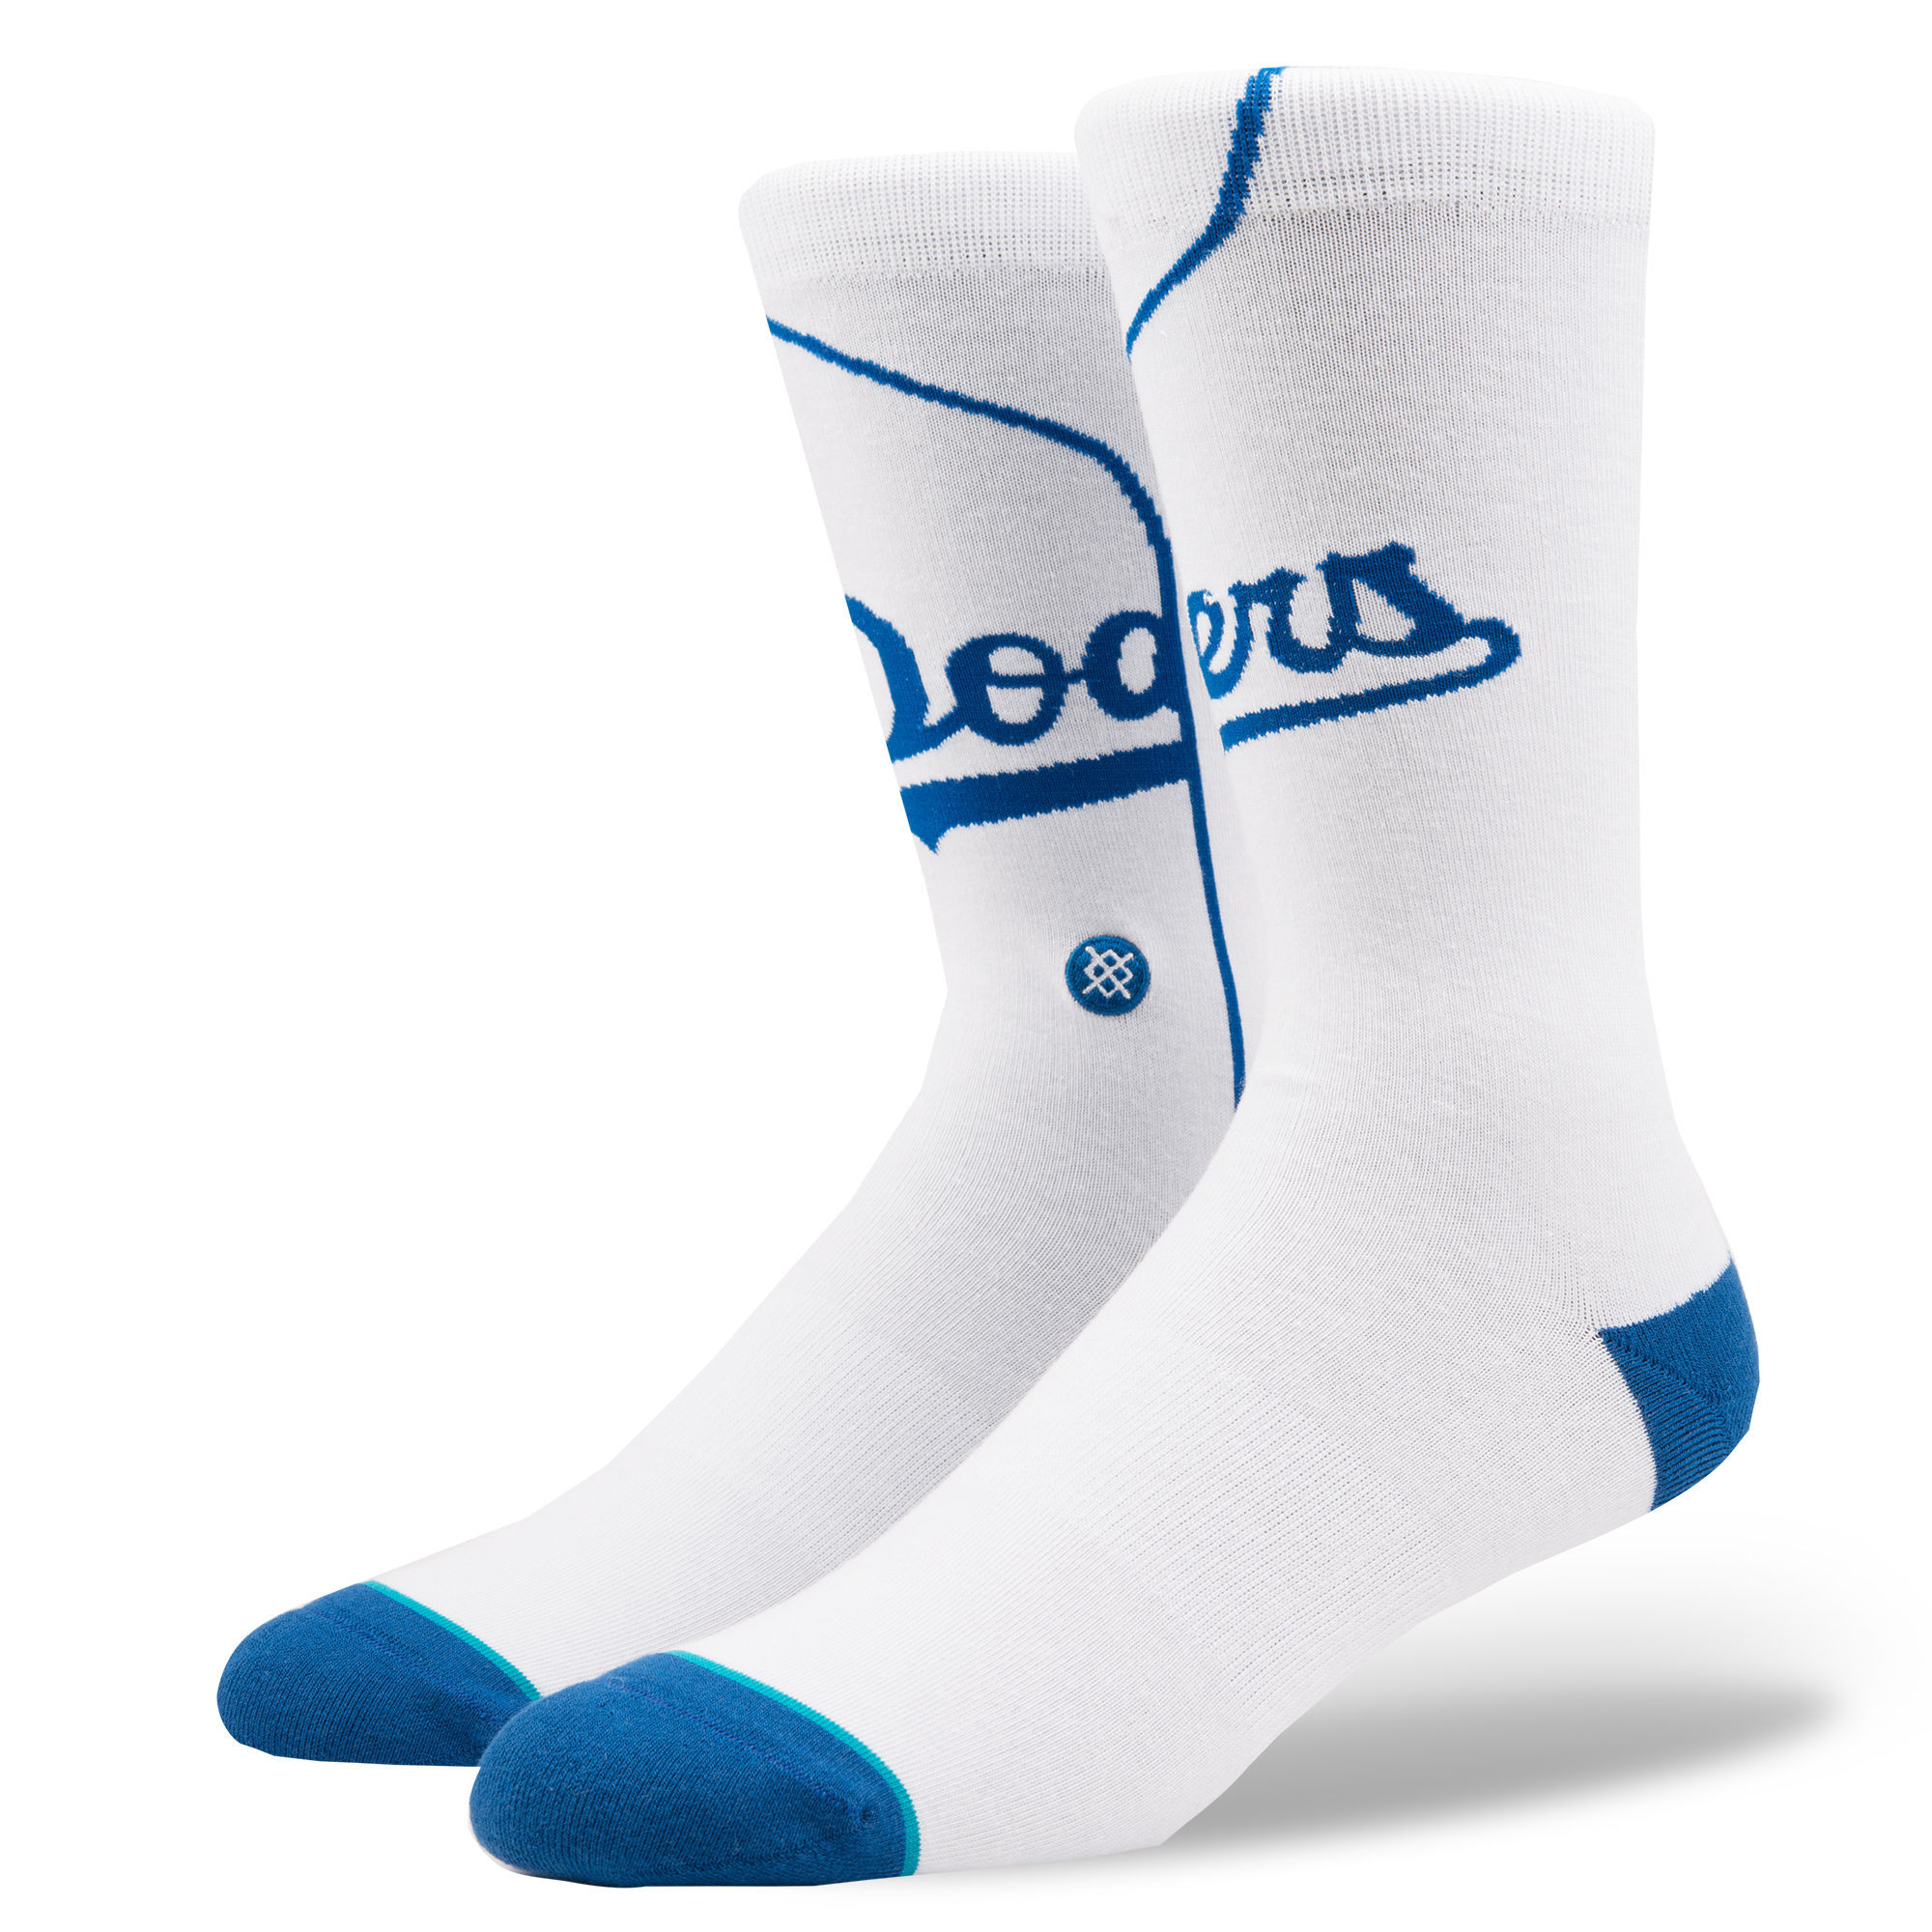 Dodgers Socks